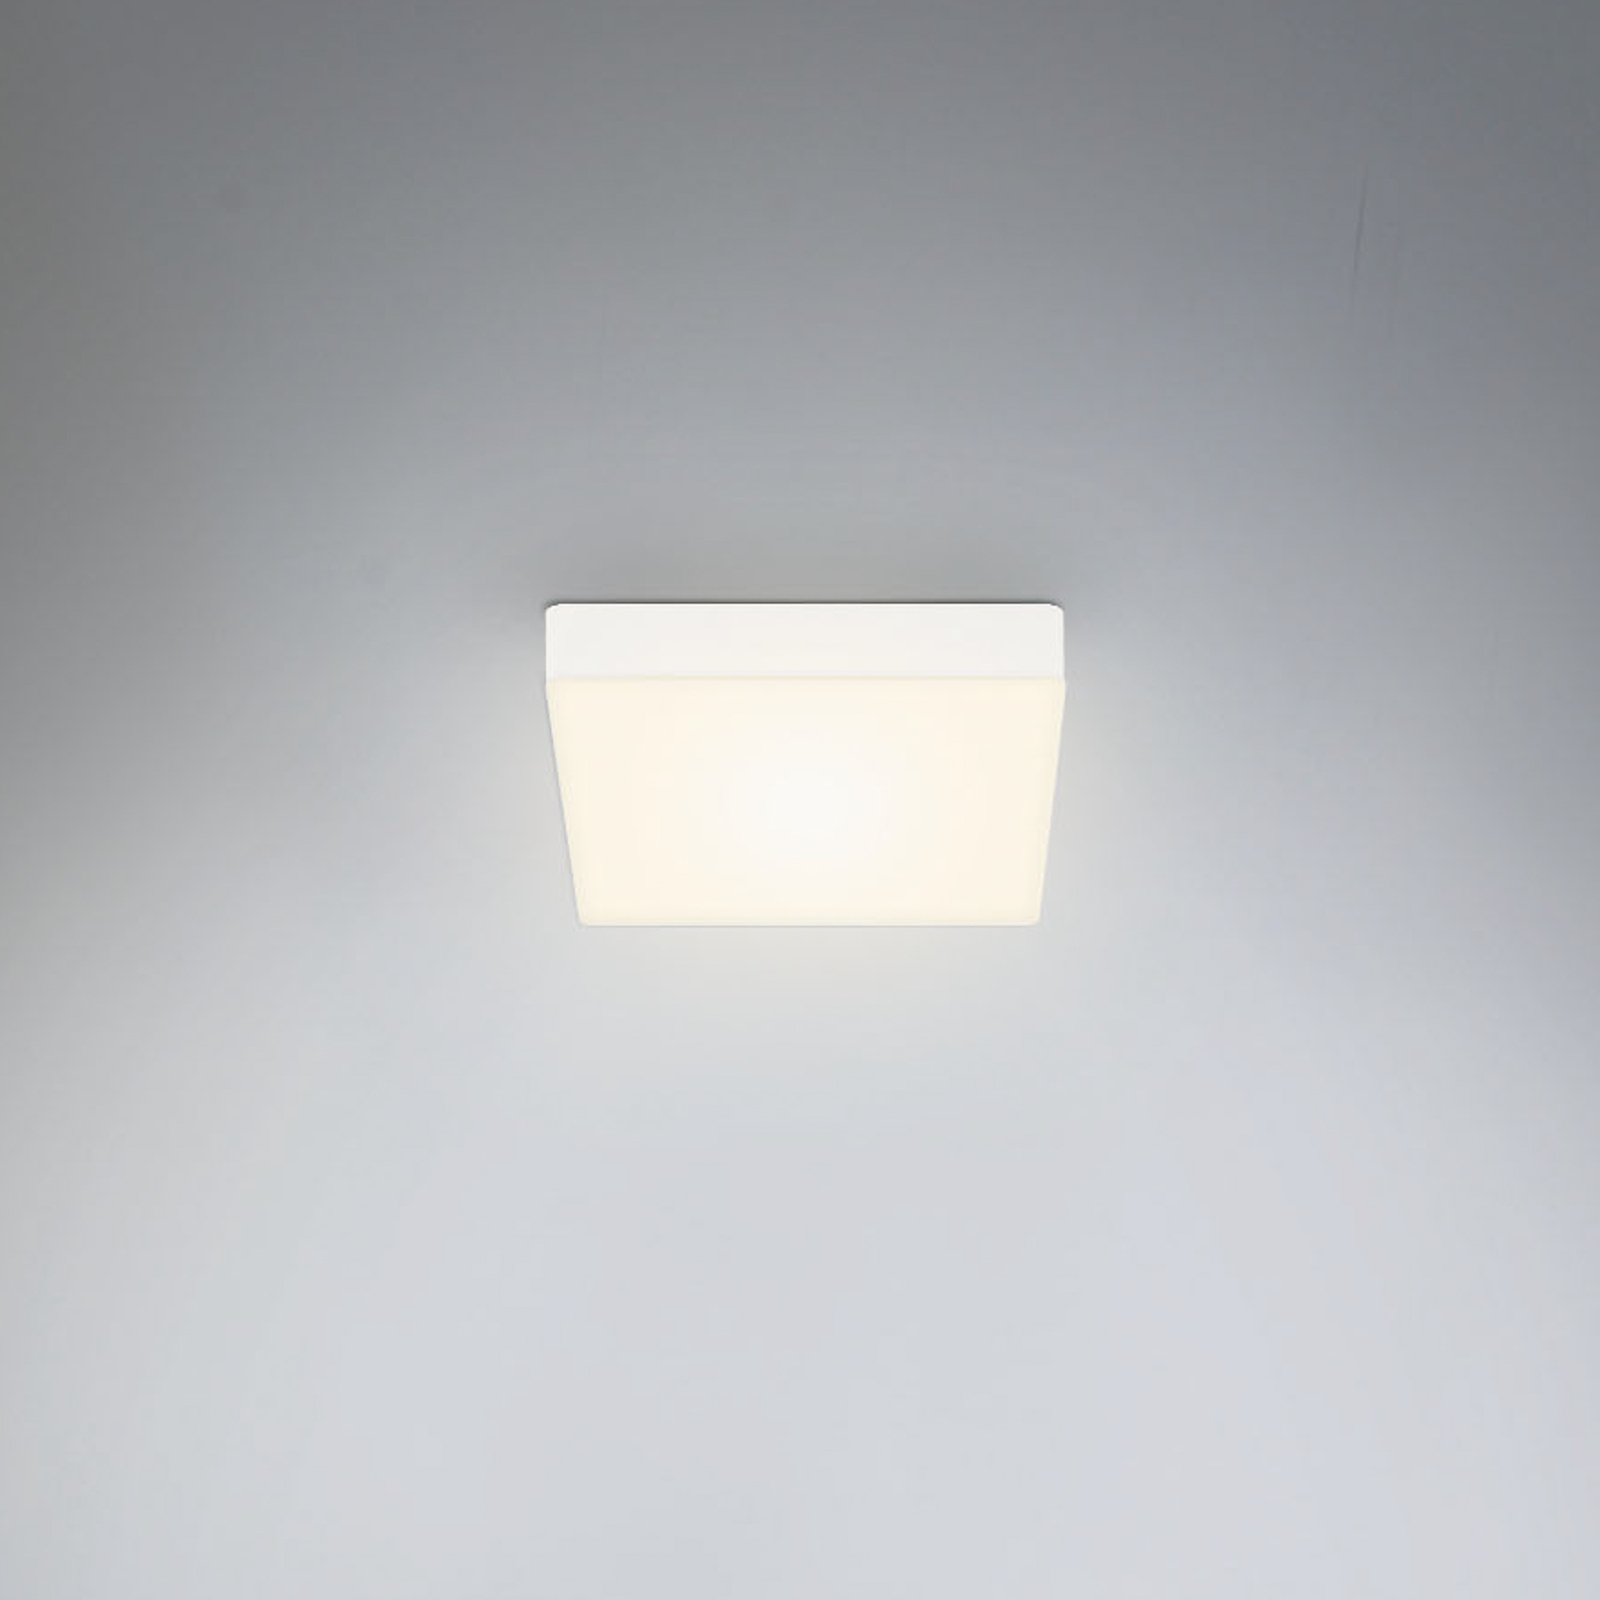 LED plafondlamp Flame, 15,7 x 15,7 cm, wit